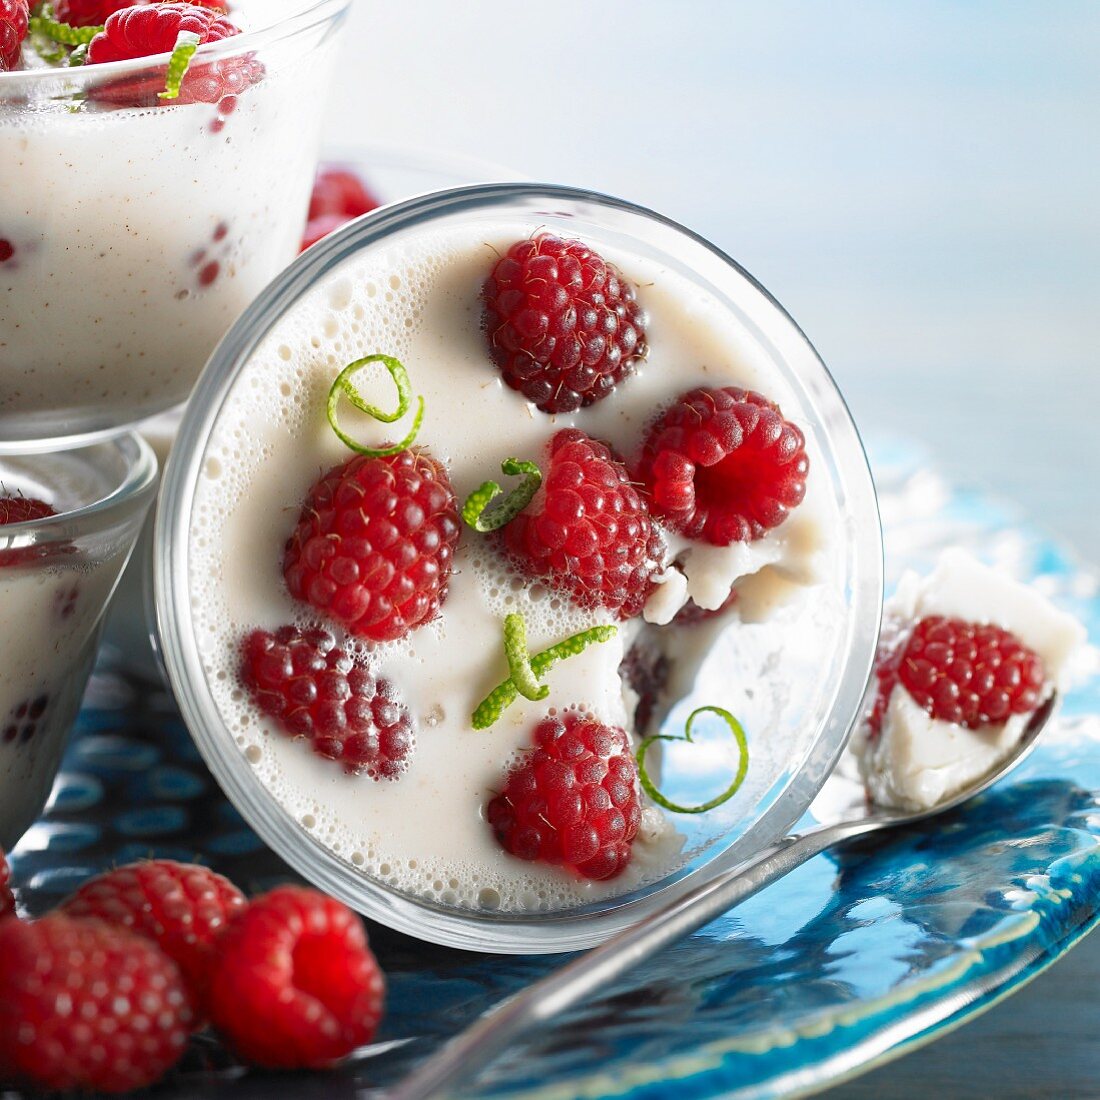 Coconut cream with raspberries (close-up)